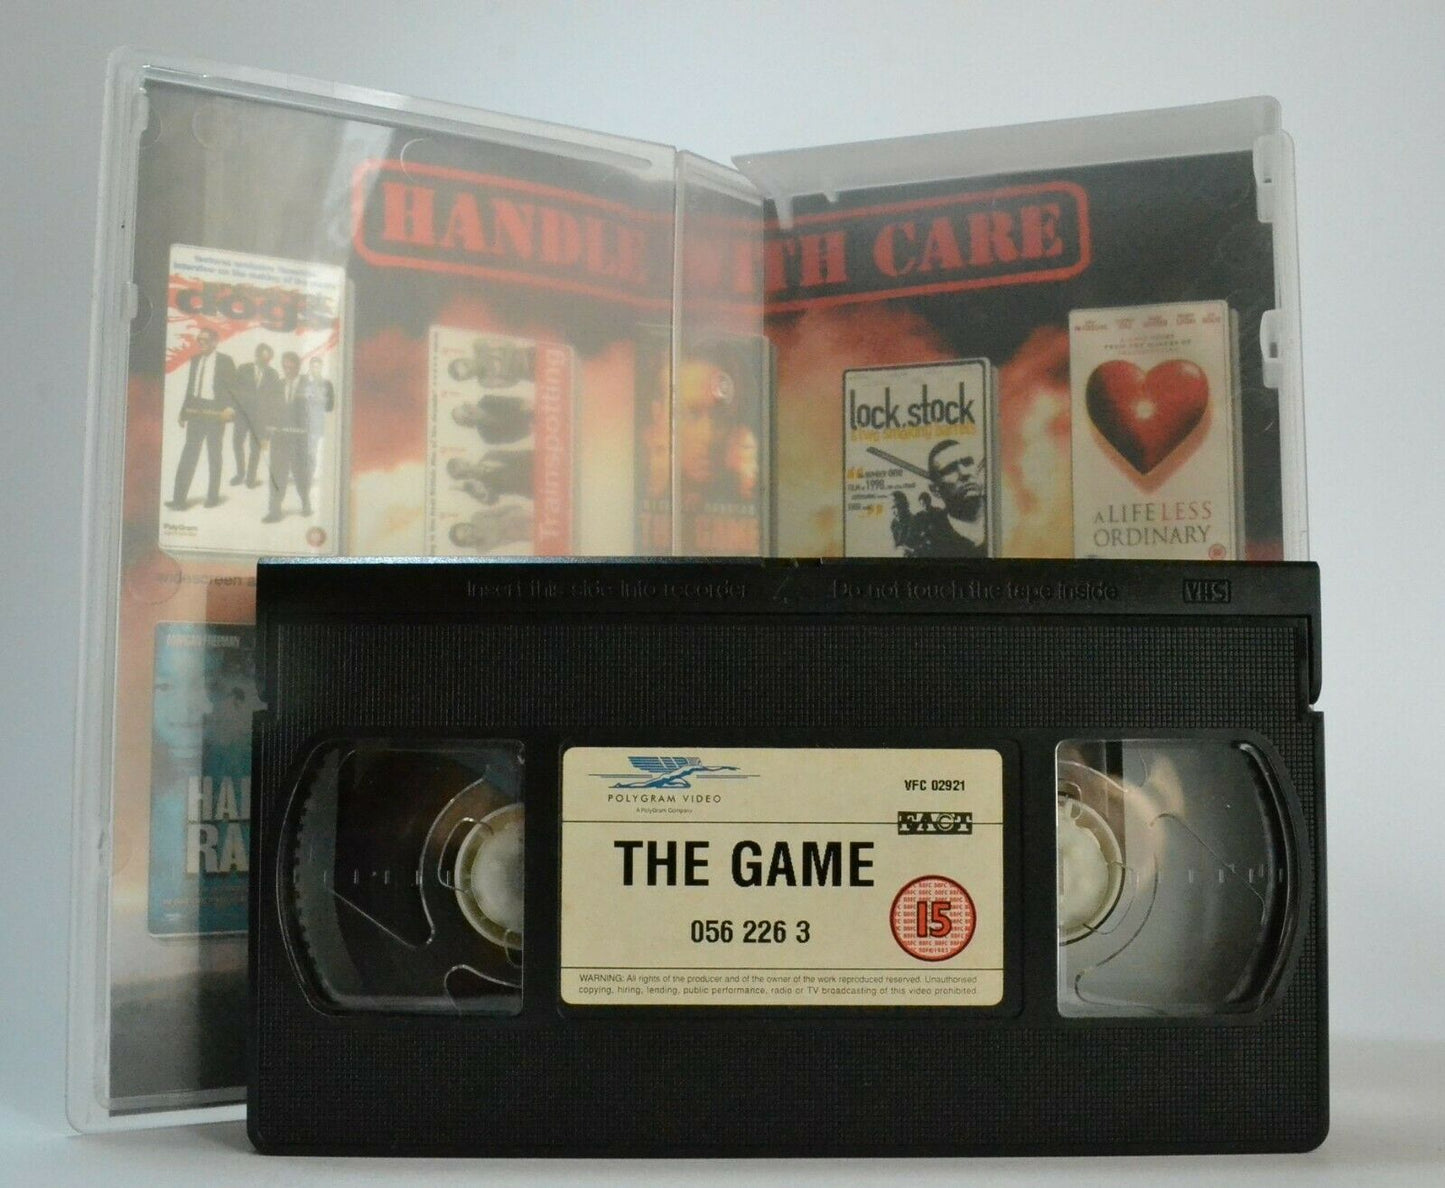 The Game (1997); <David Fincher> Neo-Noir Mystery Thriller - Sean Penn - Pal VHS-